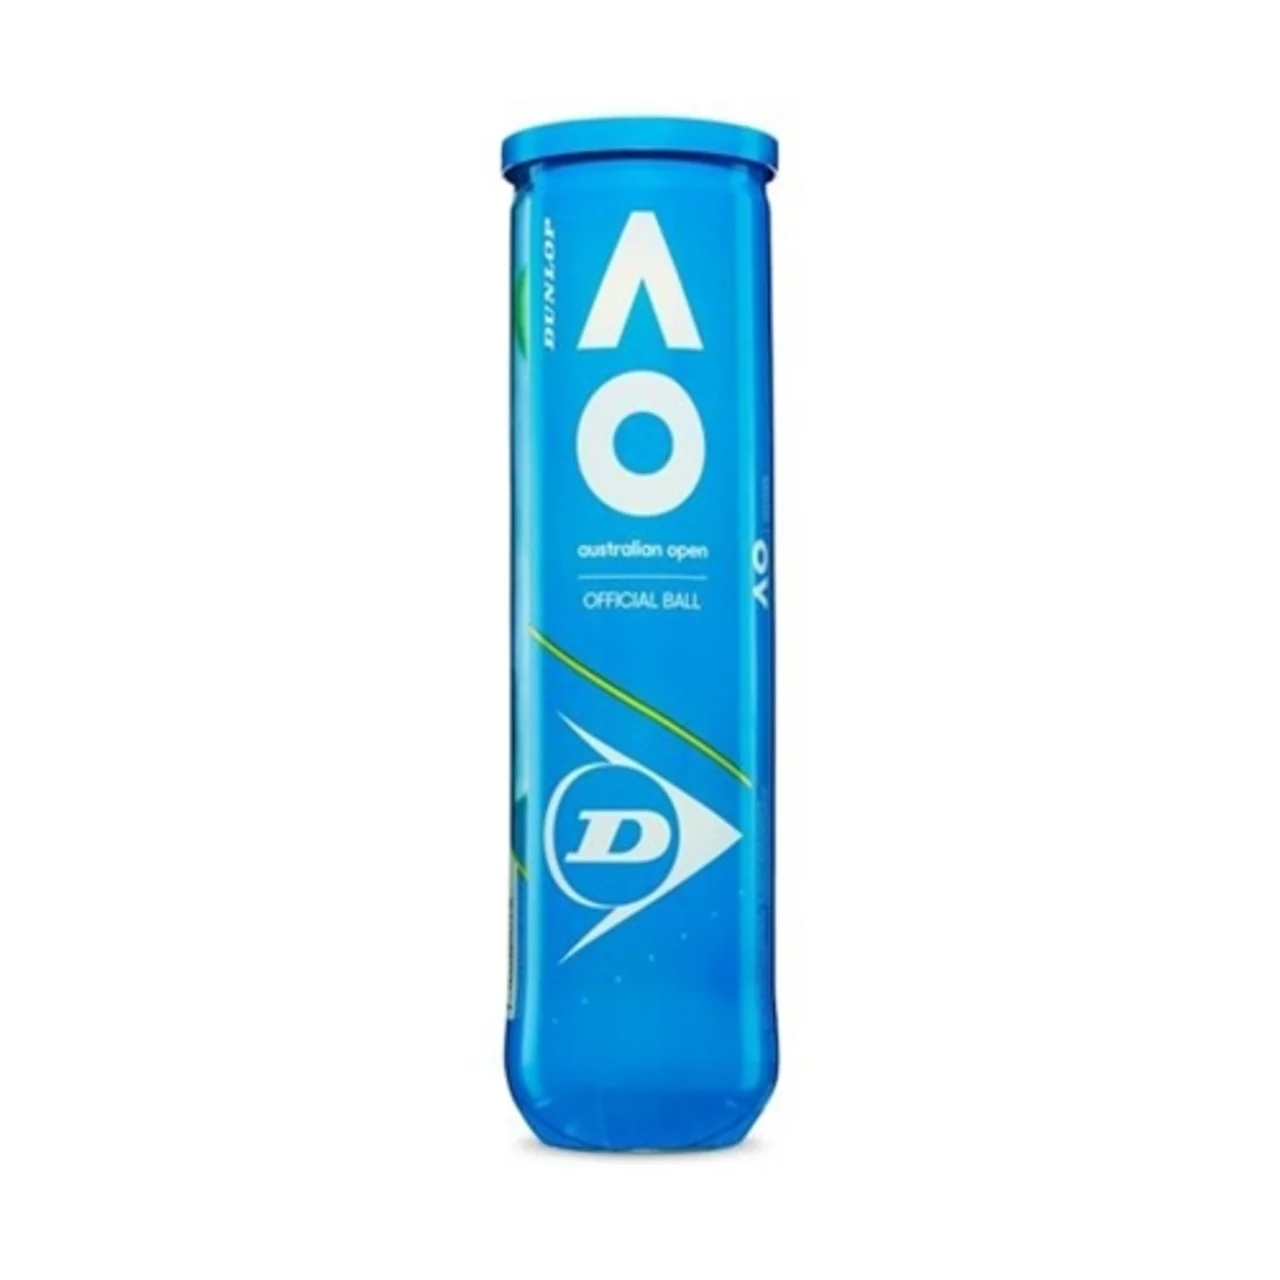 Dunlop Australian Open 1 tube